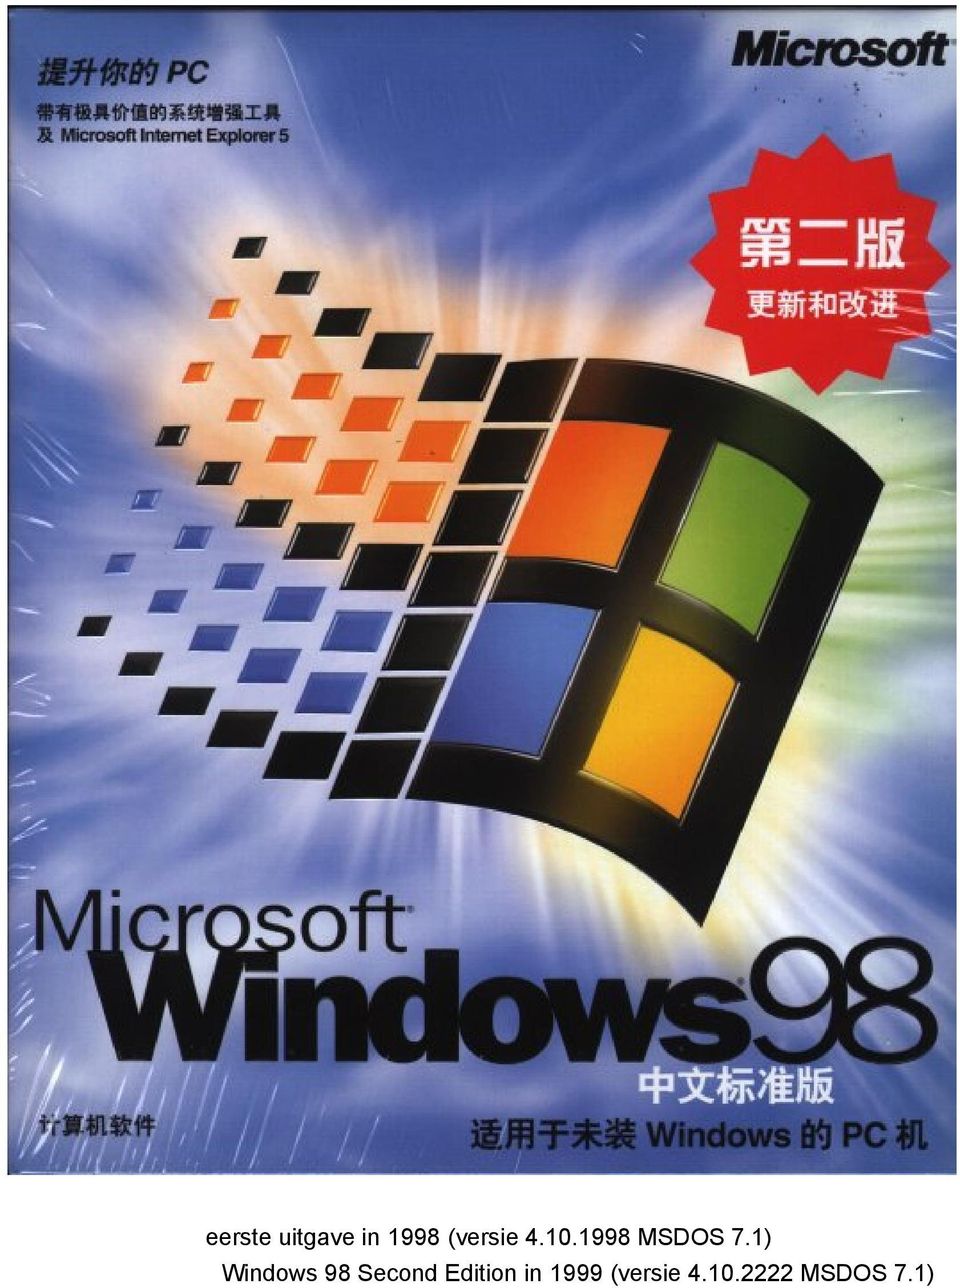 1) Windows 98 Second Edition